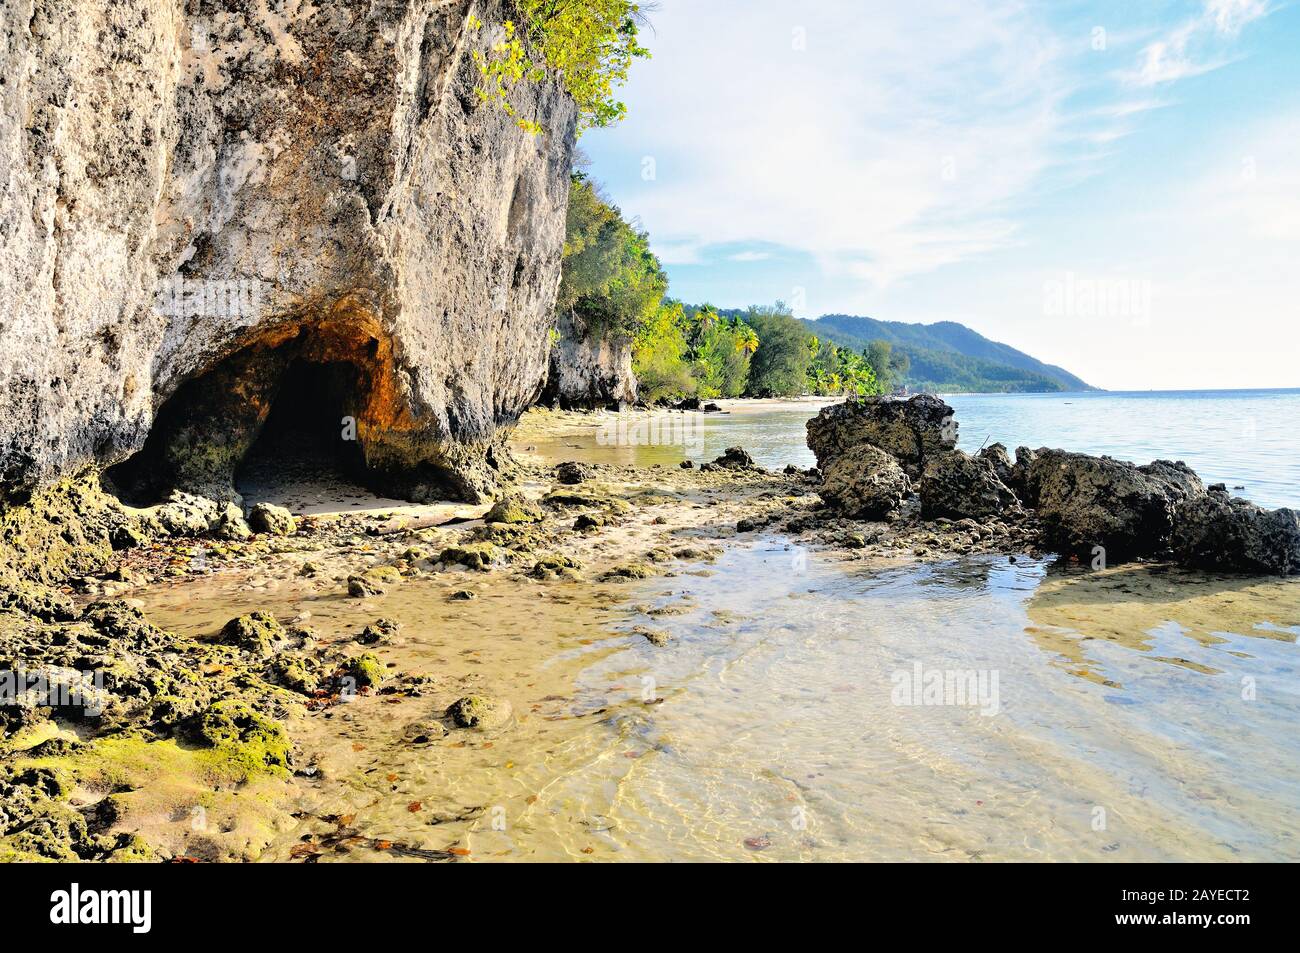 on the beach of coral rocks Kri Raja Ampat Indonesia Stock Photo